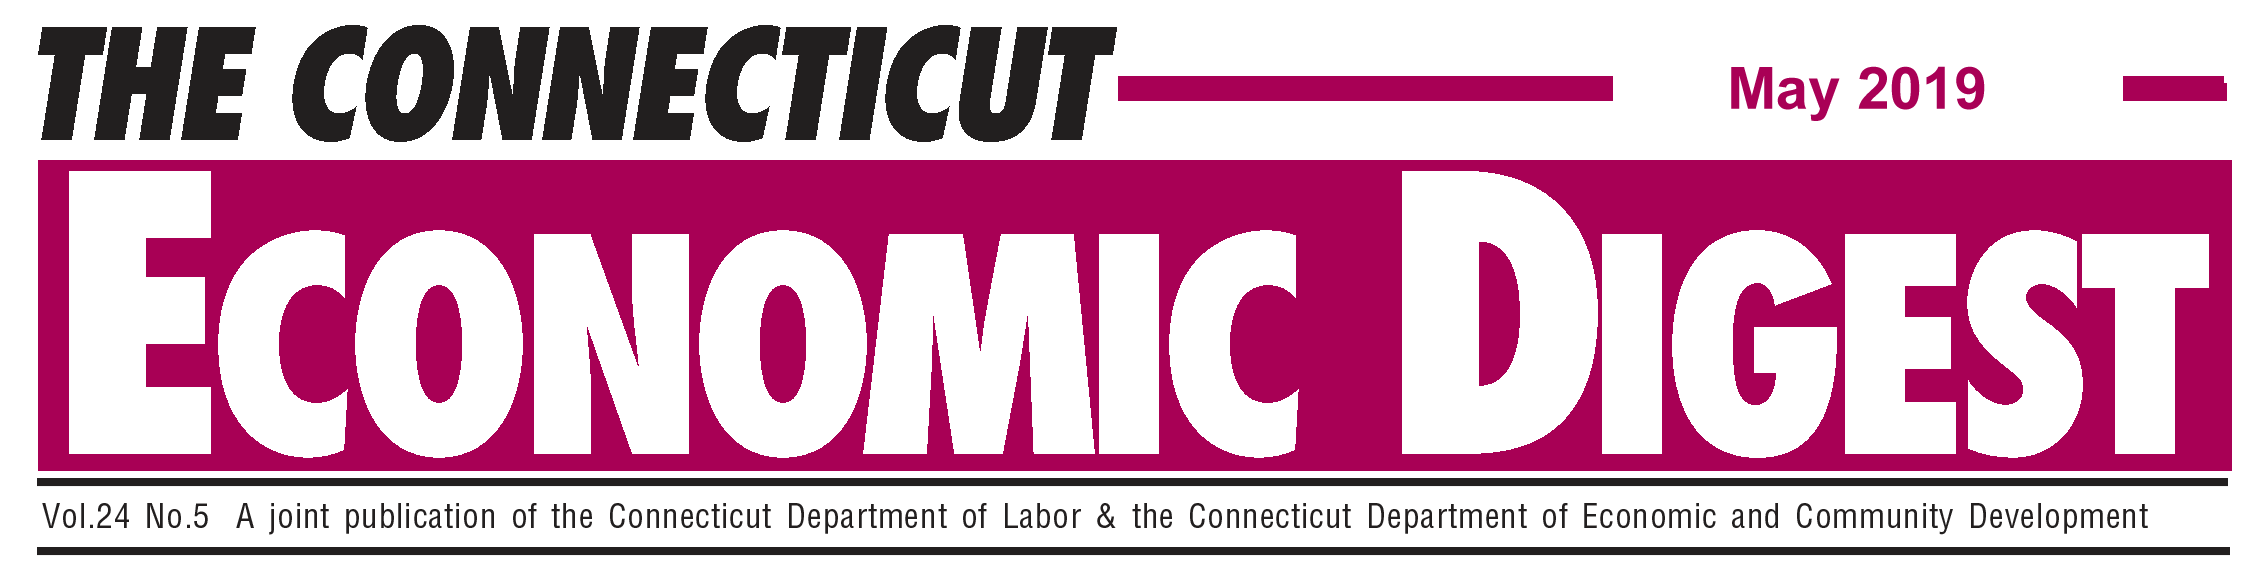 May 2019 Connecticut Economic Digest